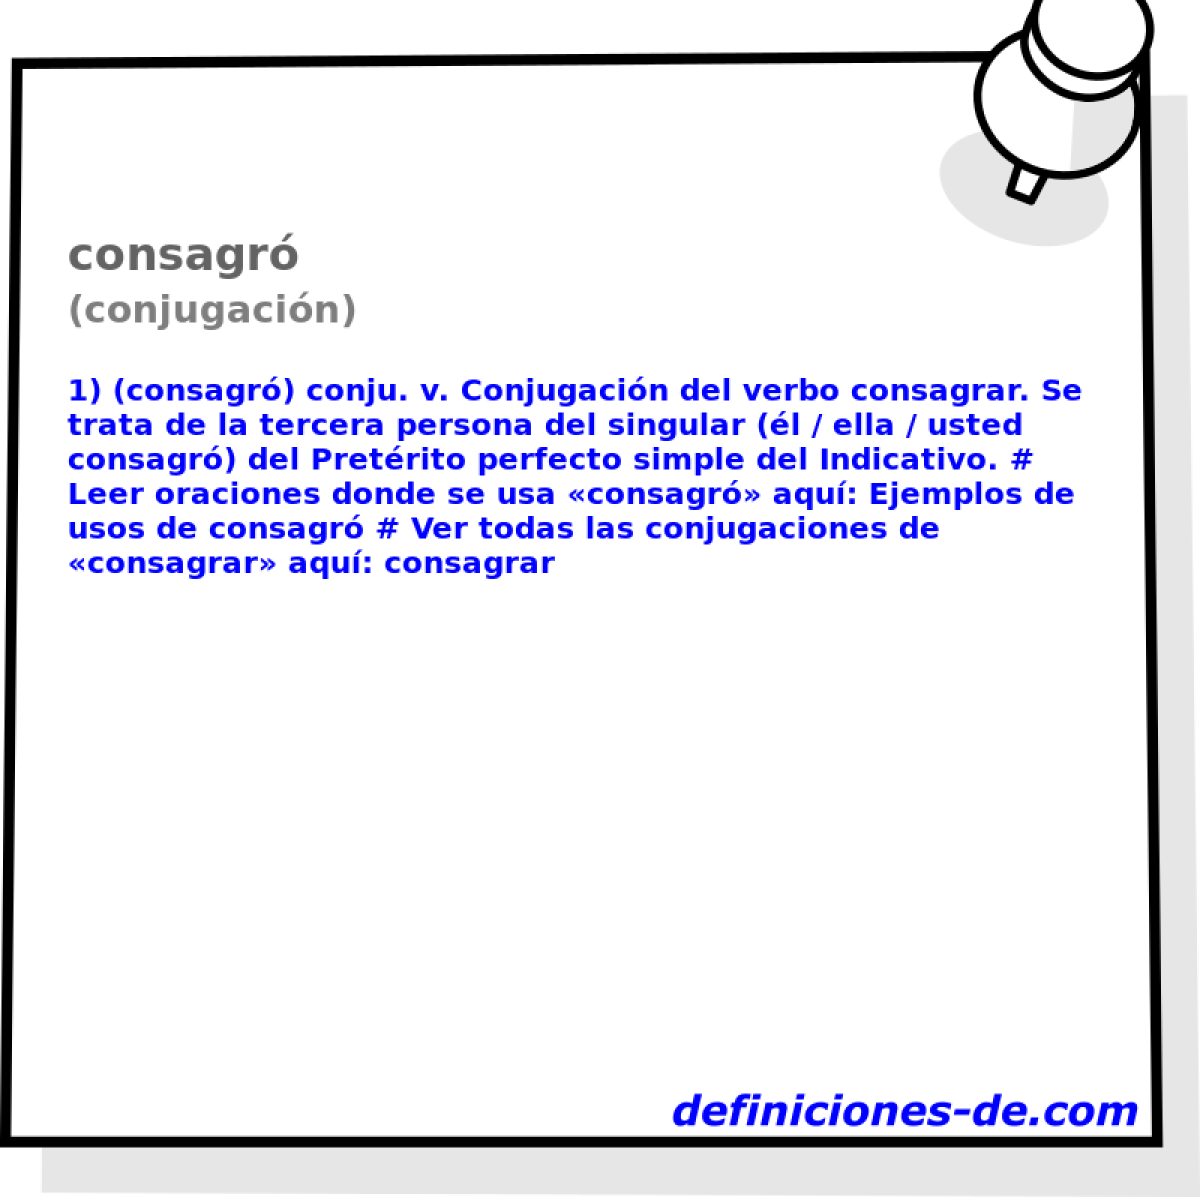 consagr (conjugacin)